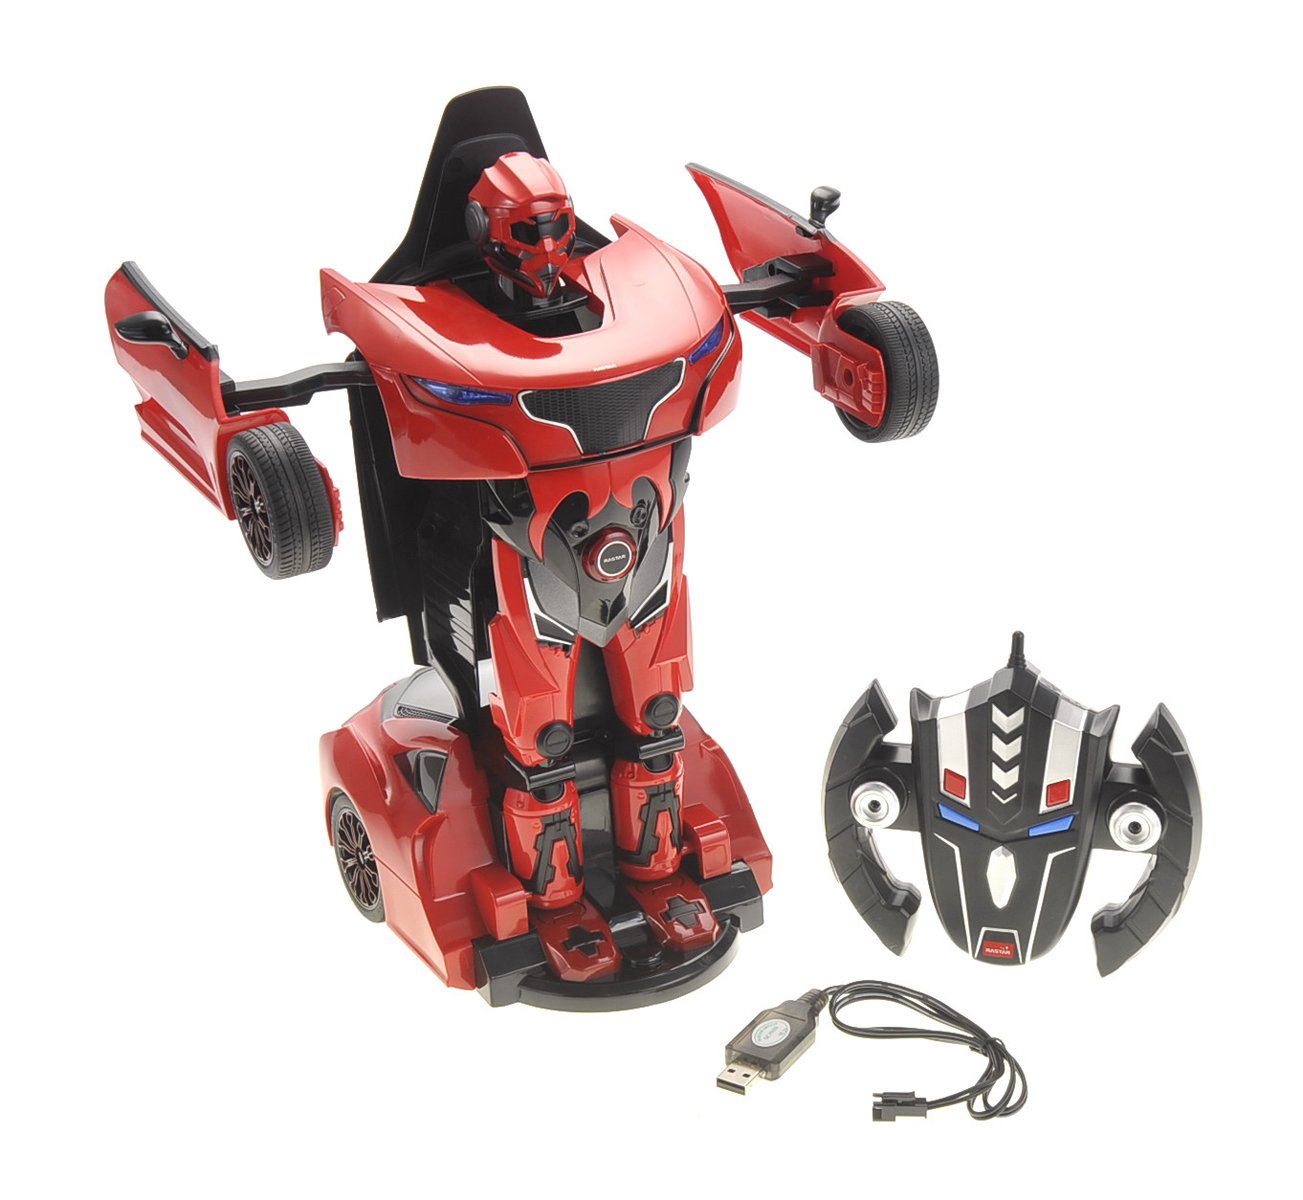 AZ Trading & Import azimporter 1:14 Rs Transformer 2.4G Robot Car (Red)